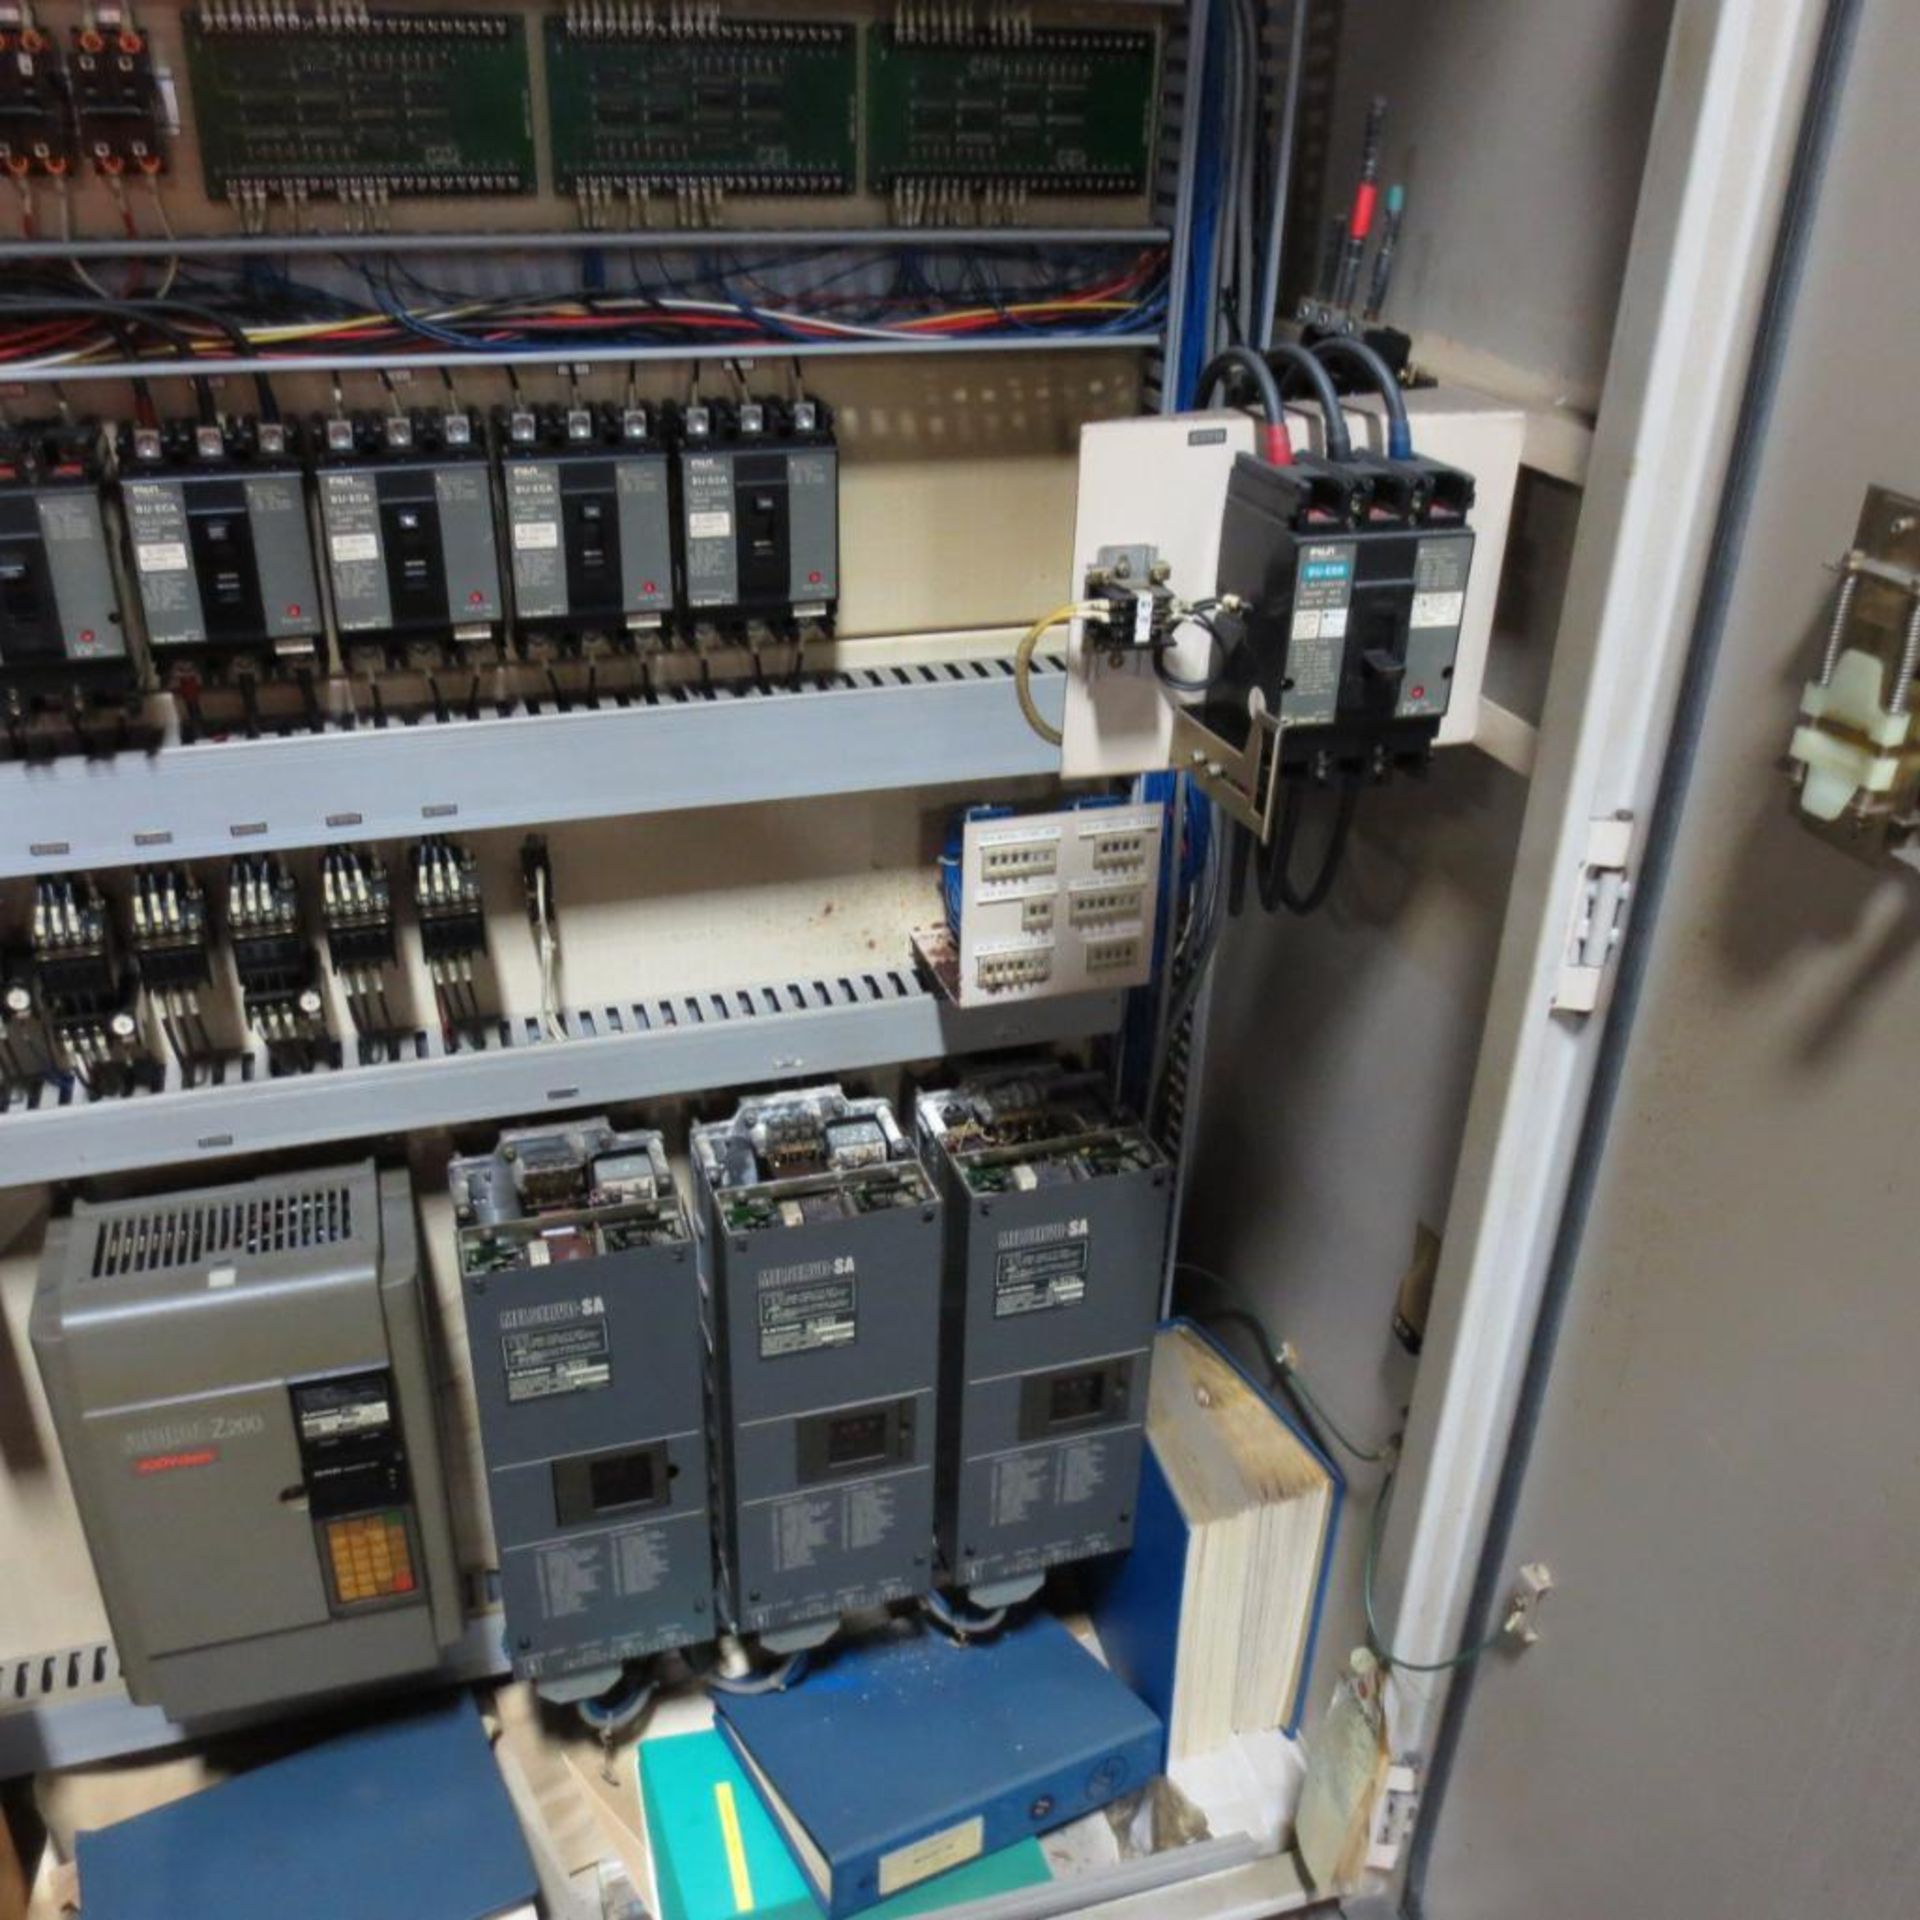 Elliptic Grinder Control Cabinet. Loading Fee is $30.00 - Image 3 of 6